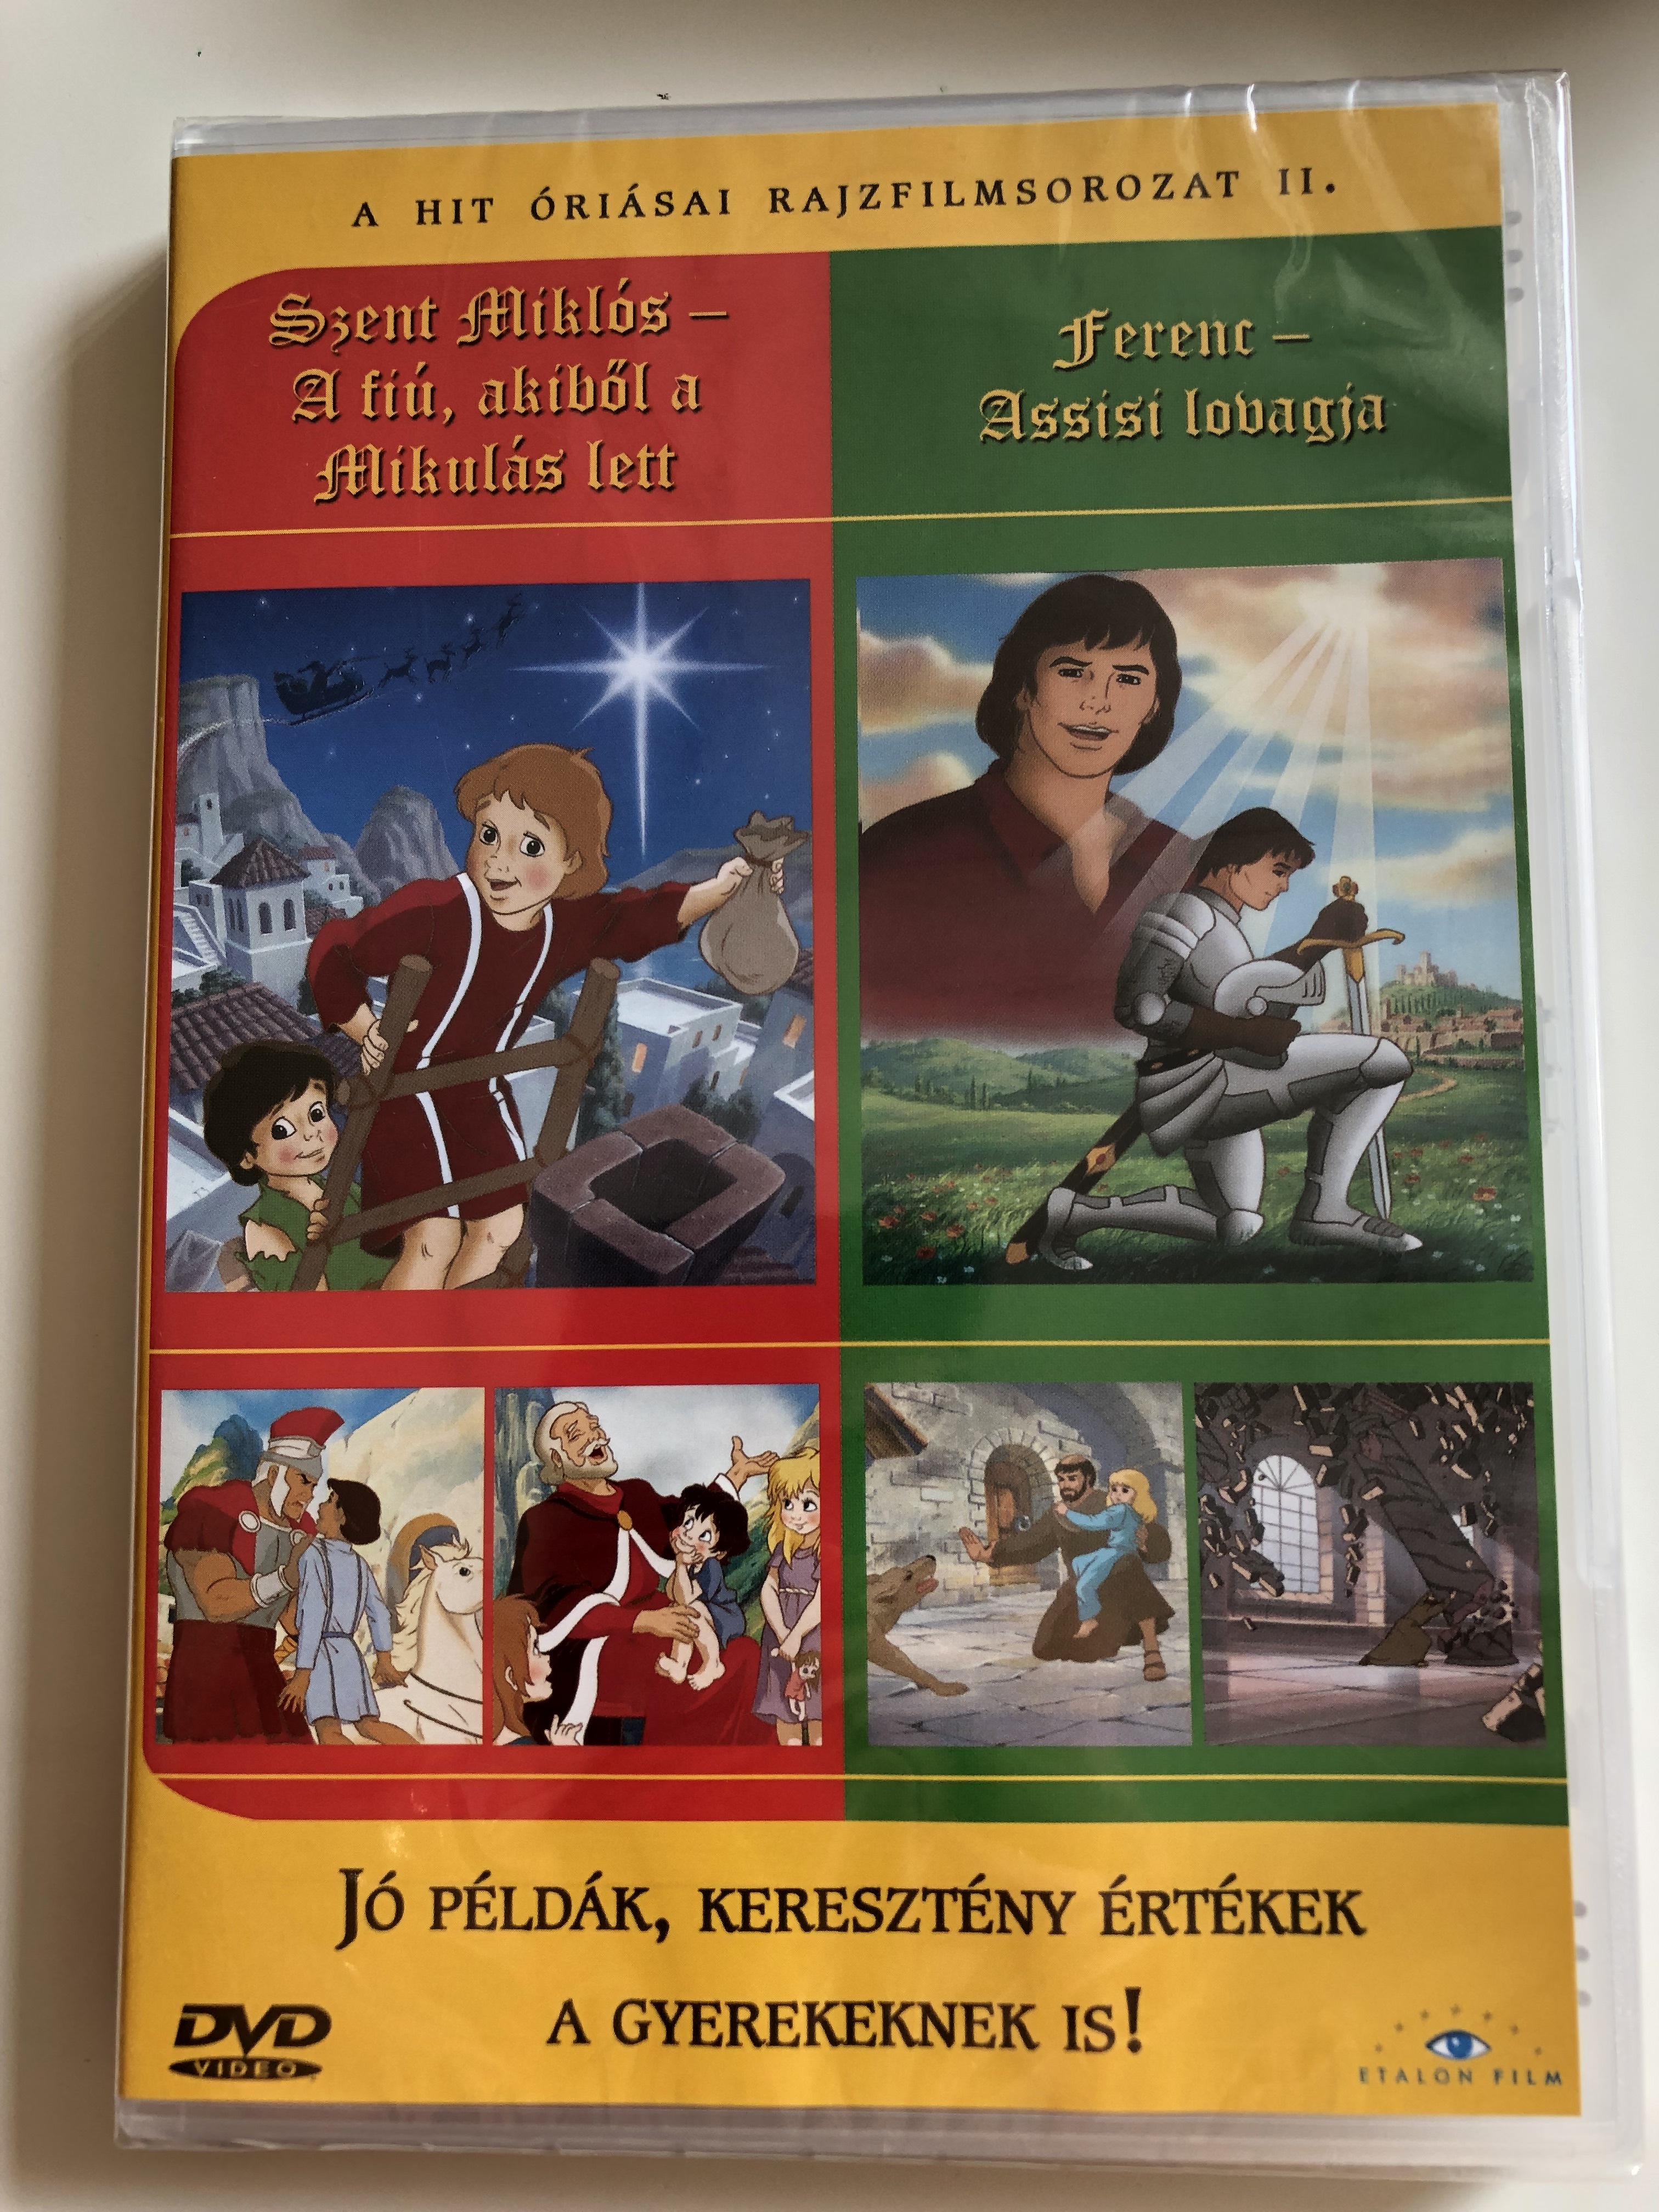 giants-of-faith-cartoon-series-ii-dvd-nicolas-the-boy-who-became-santa-francis-the-knight-of-assisi-szent-mikul-s-a-fi-akib-l-a-mikul-s-lett-ferenc-assisi-lovagja-1-.jpg